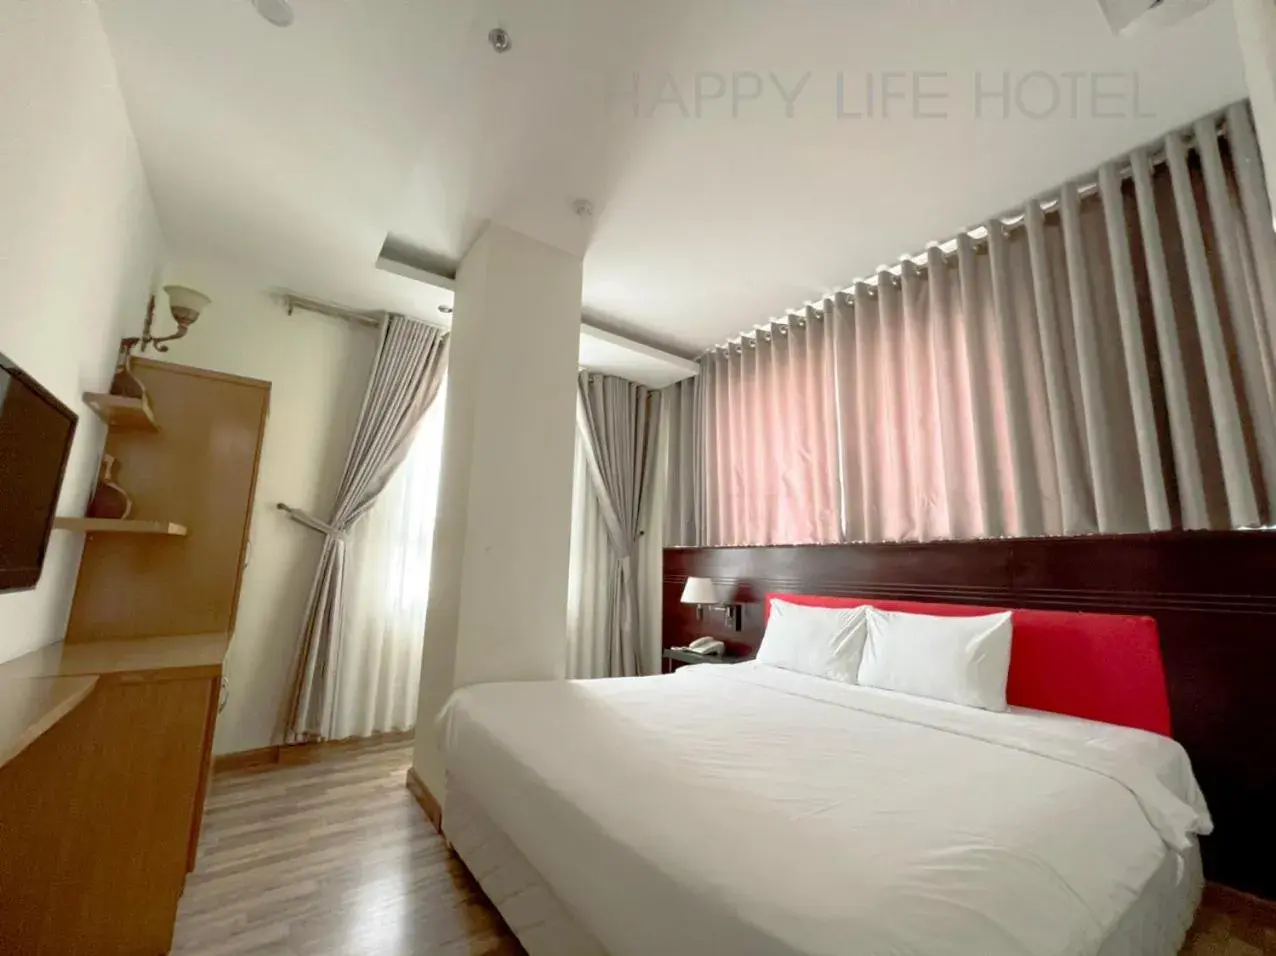 Bedroom, Bed in Happy Life Hotel